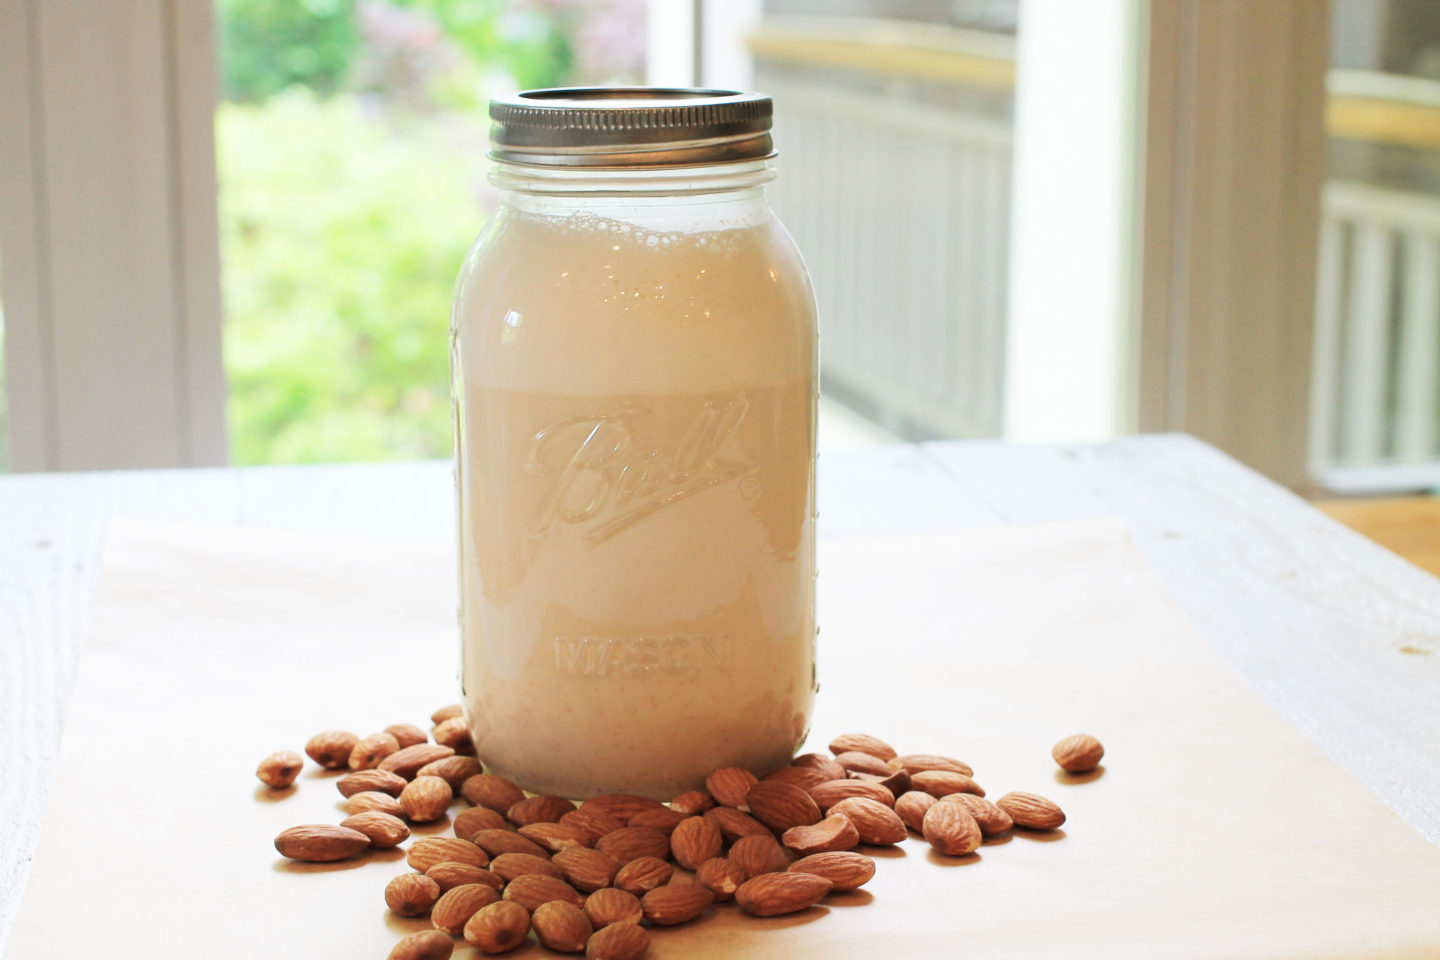 Homemade Almond Milk in Mason Jar with almonds